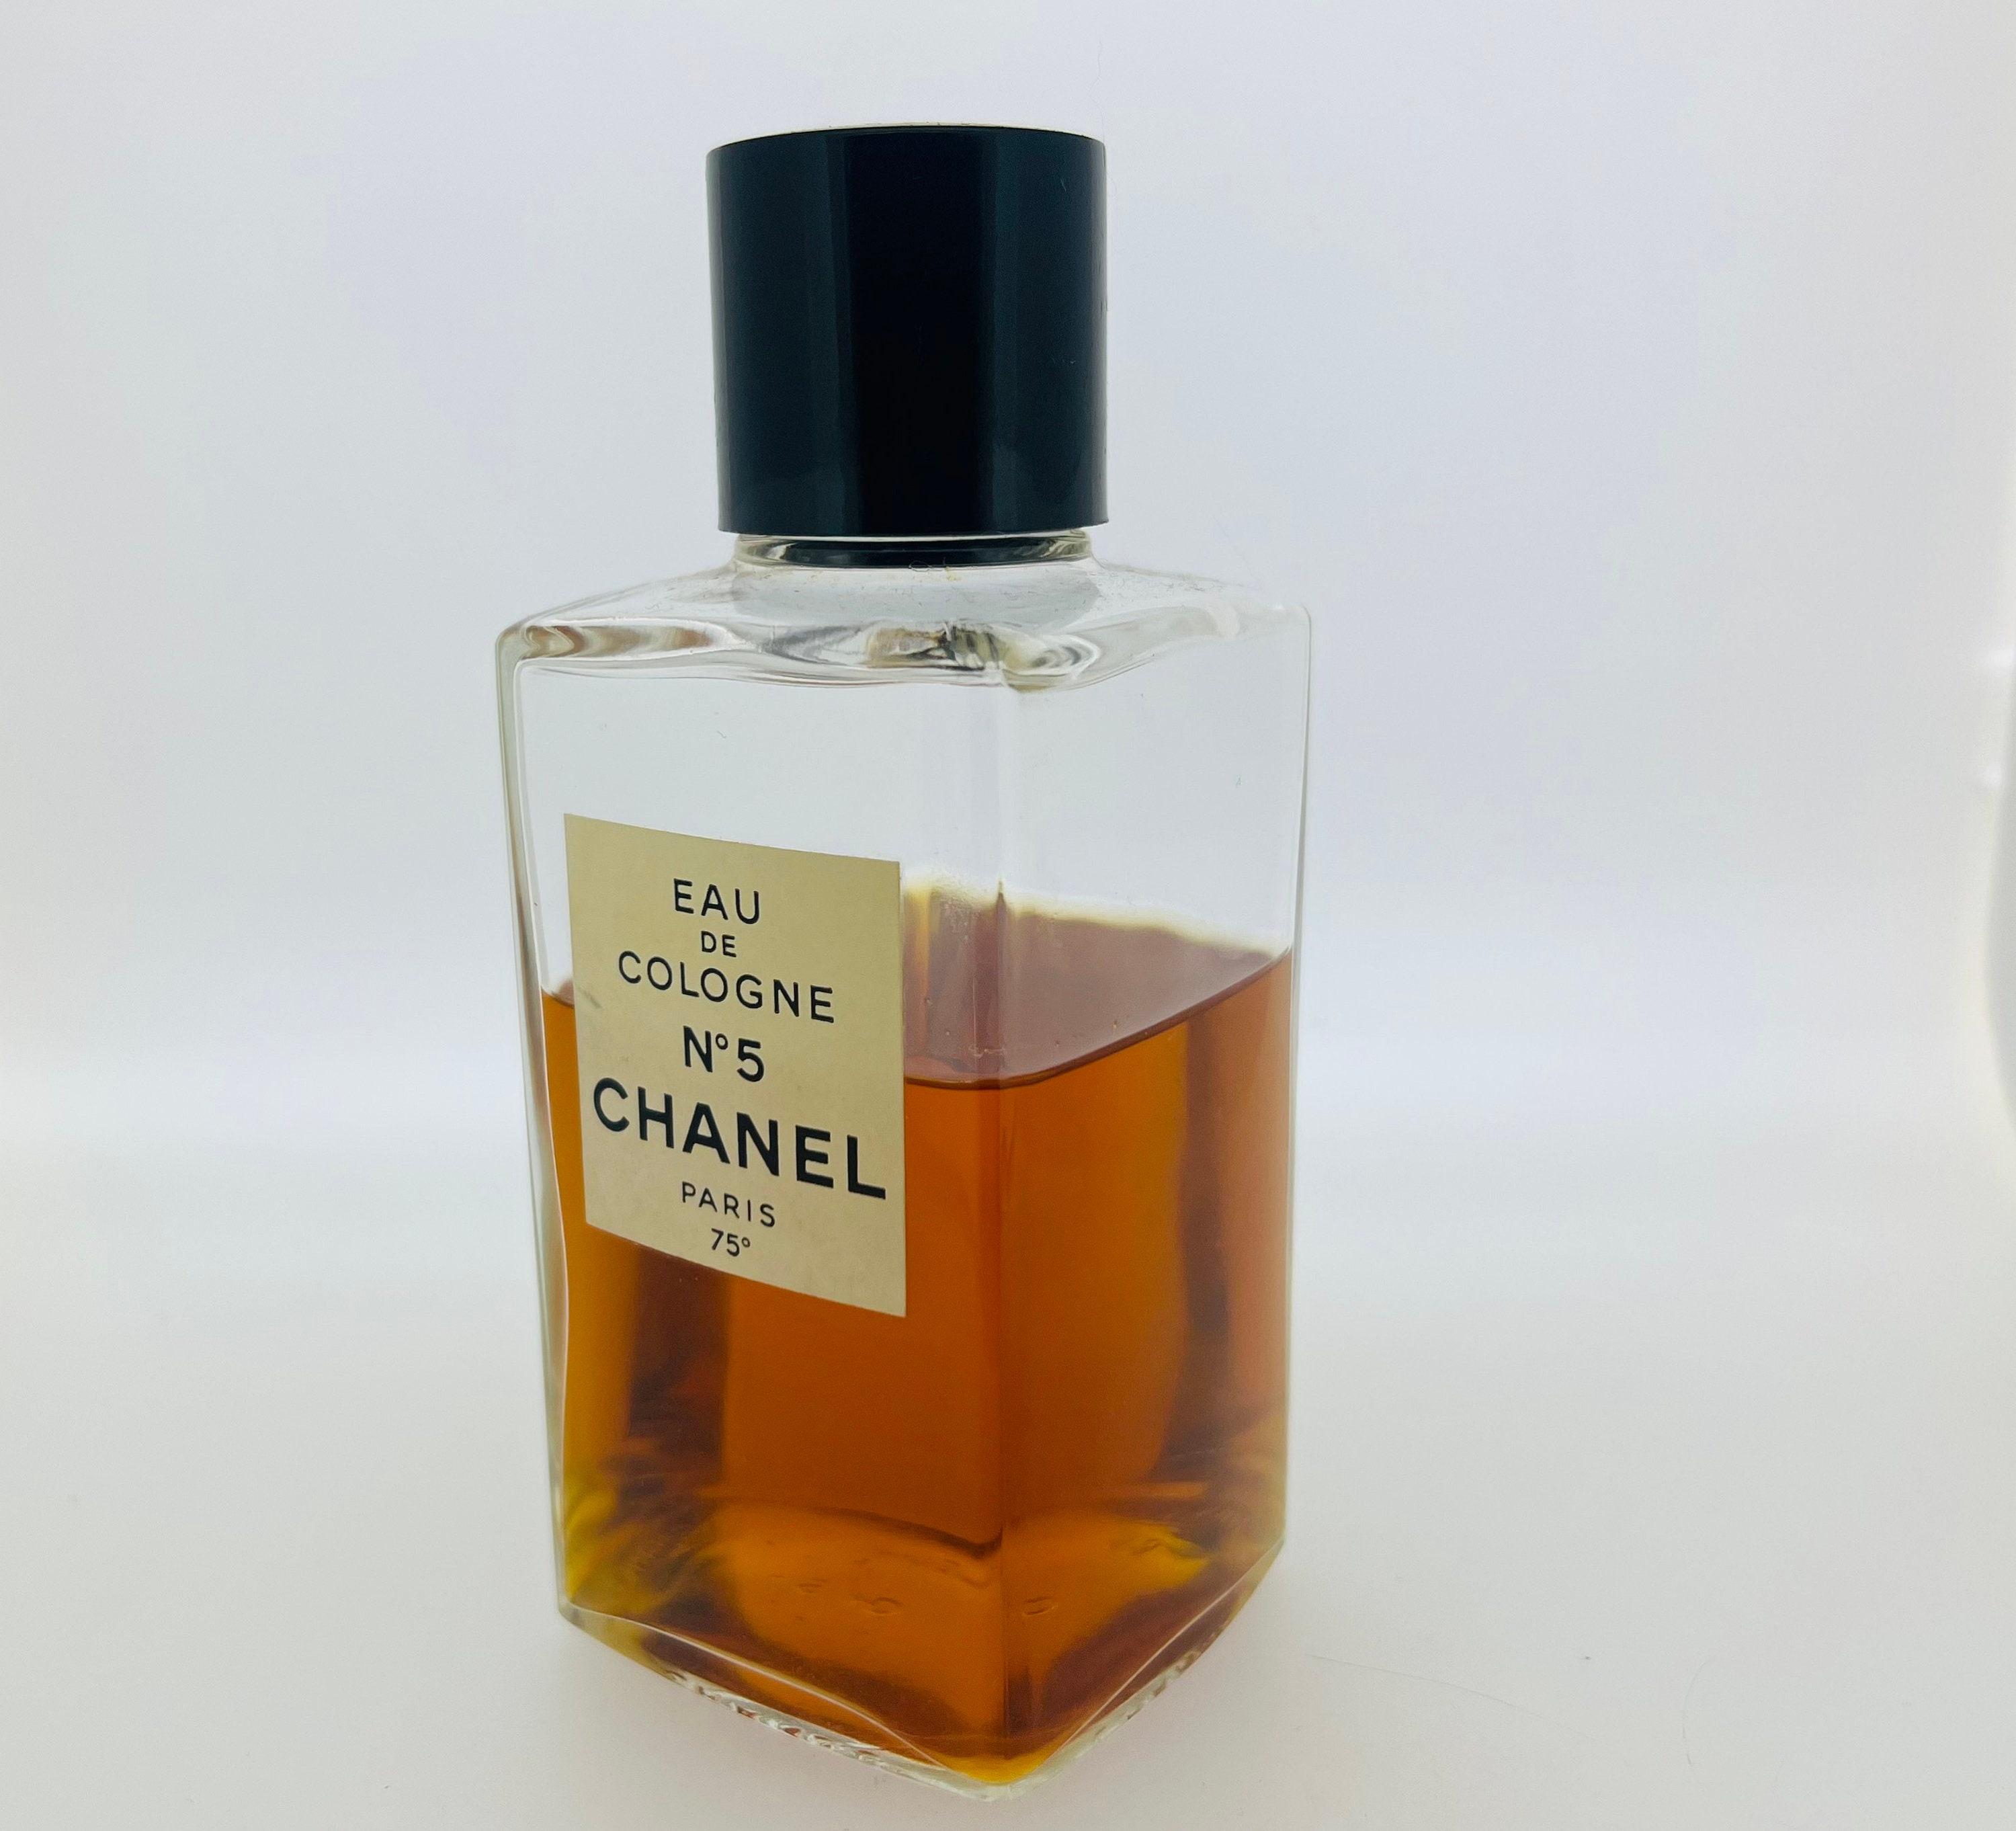 Chanel Coco Eau de Parfum EDP 2OZ 60ml Spray Vintage Refillable Atomizer